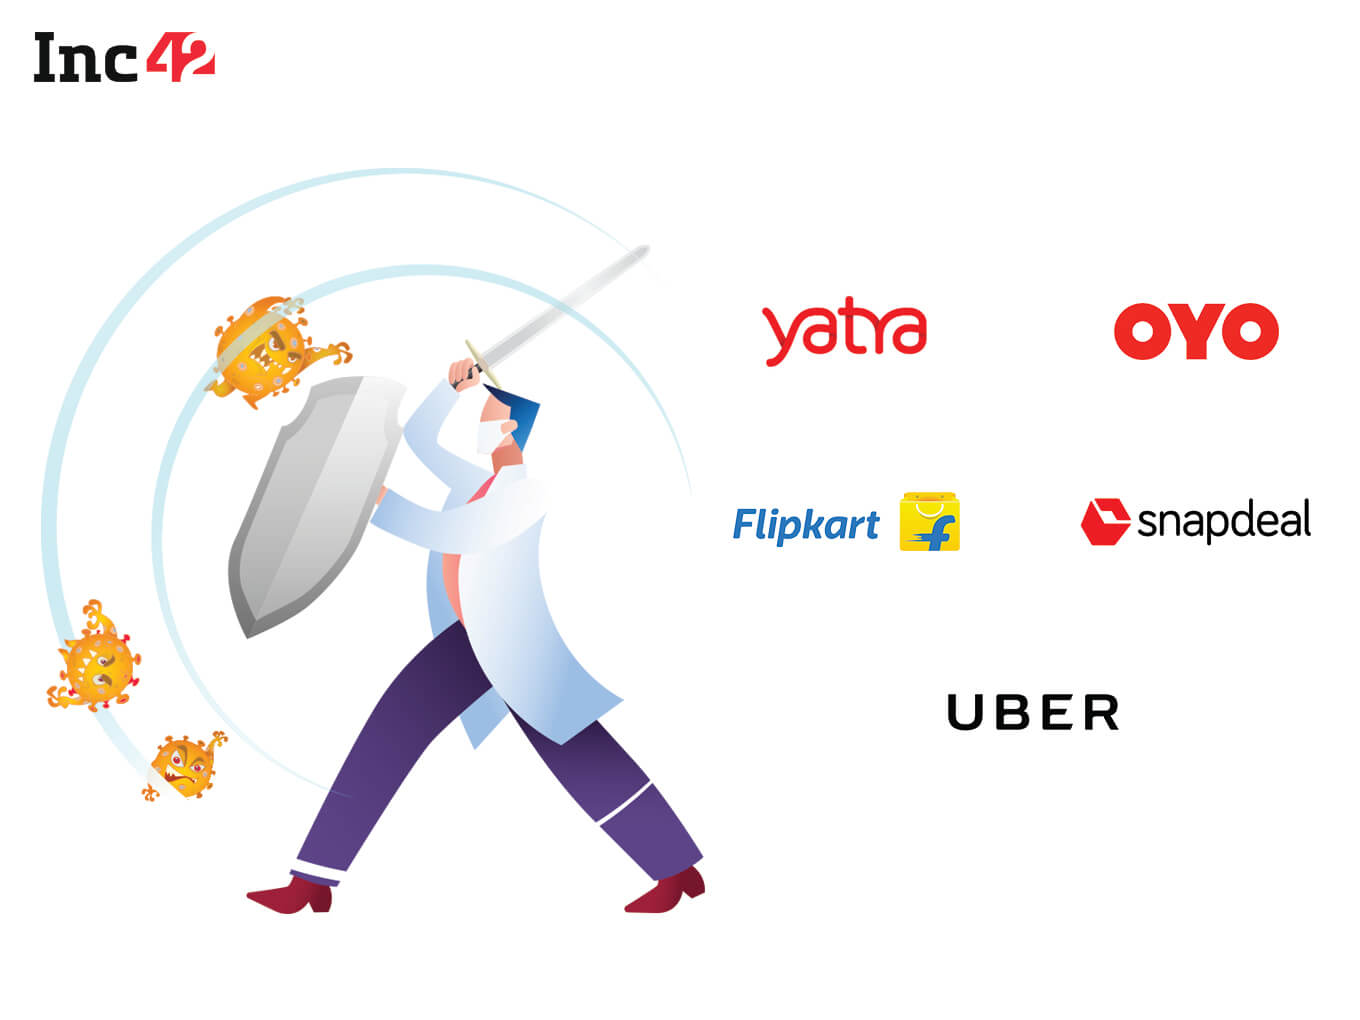 Future enterprises and shape of the Flipkart, Uber-driven economy